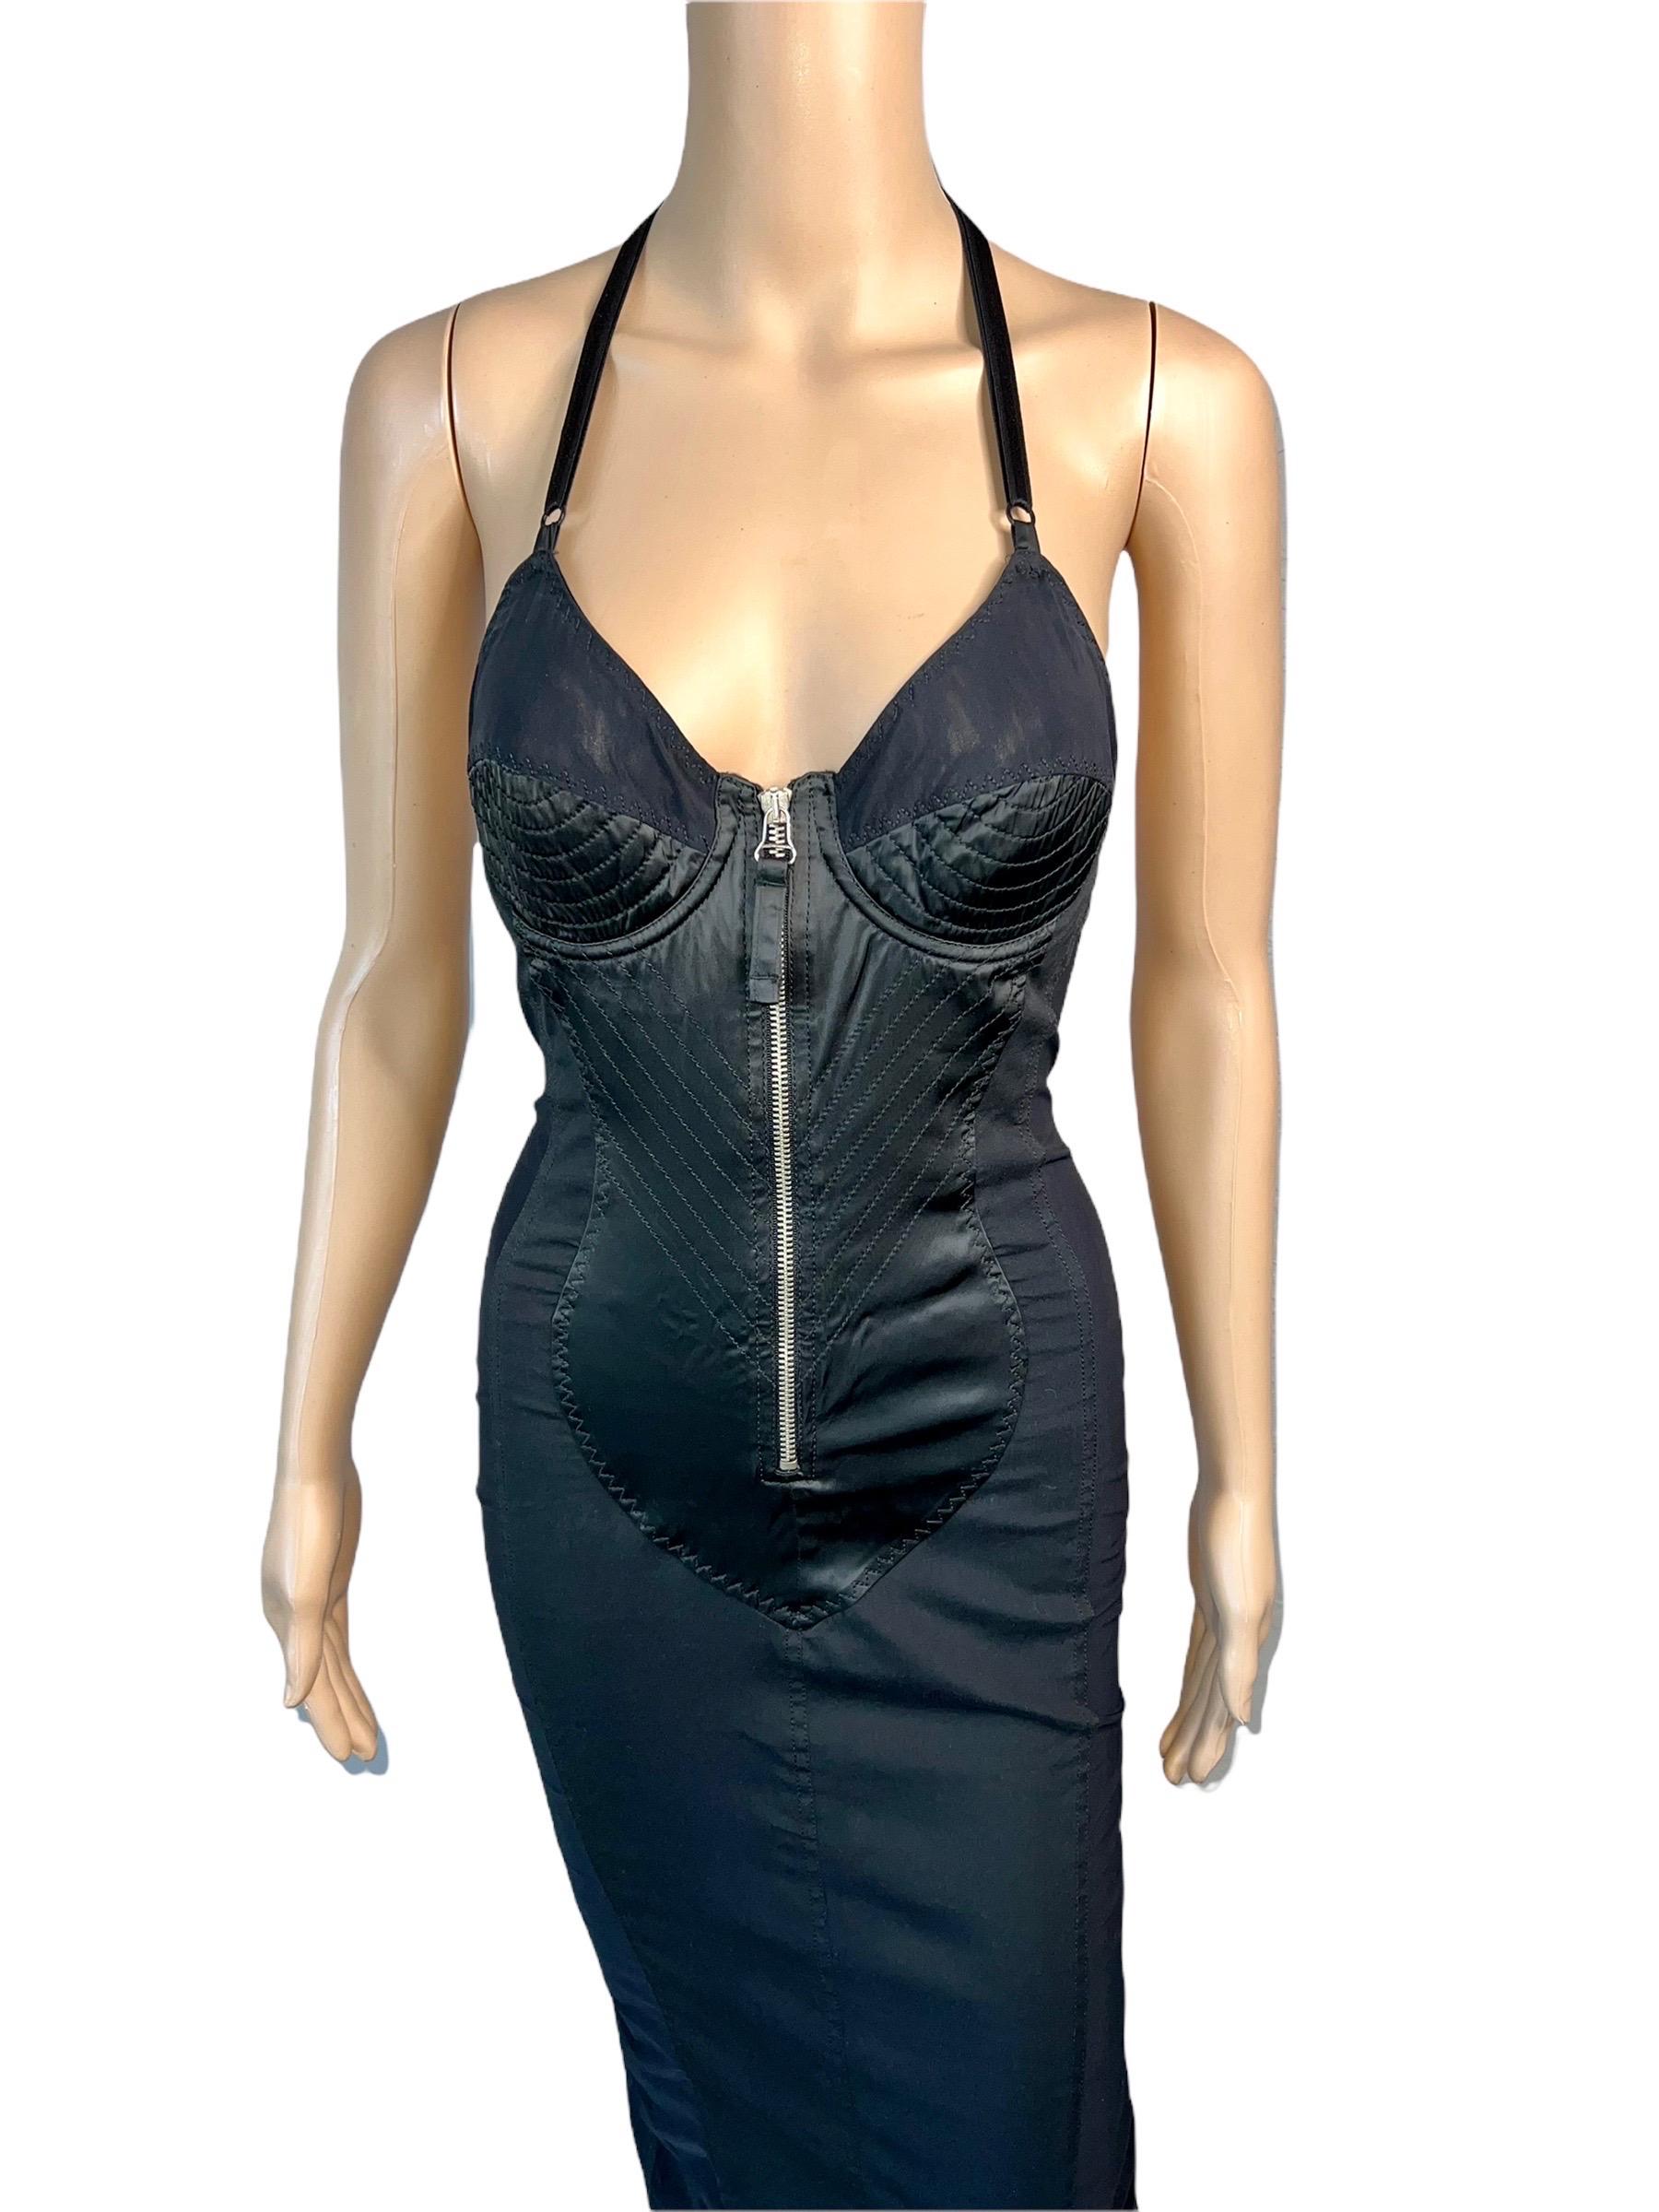 Jean Paul Gaultier 1990's Vintage Cone Bra Corset Bondage Black Evening Dress For Sale 1